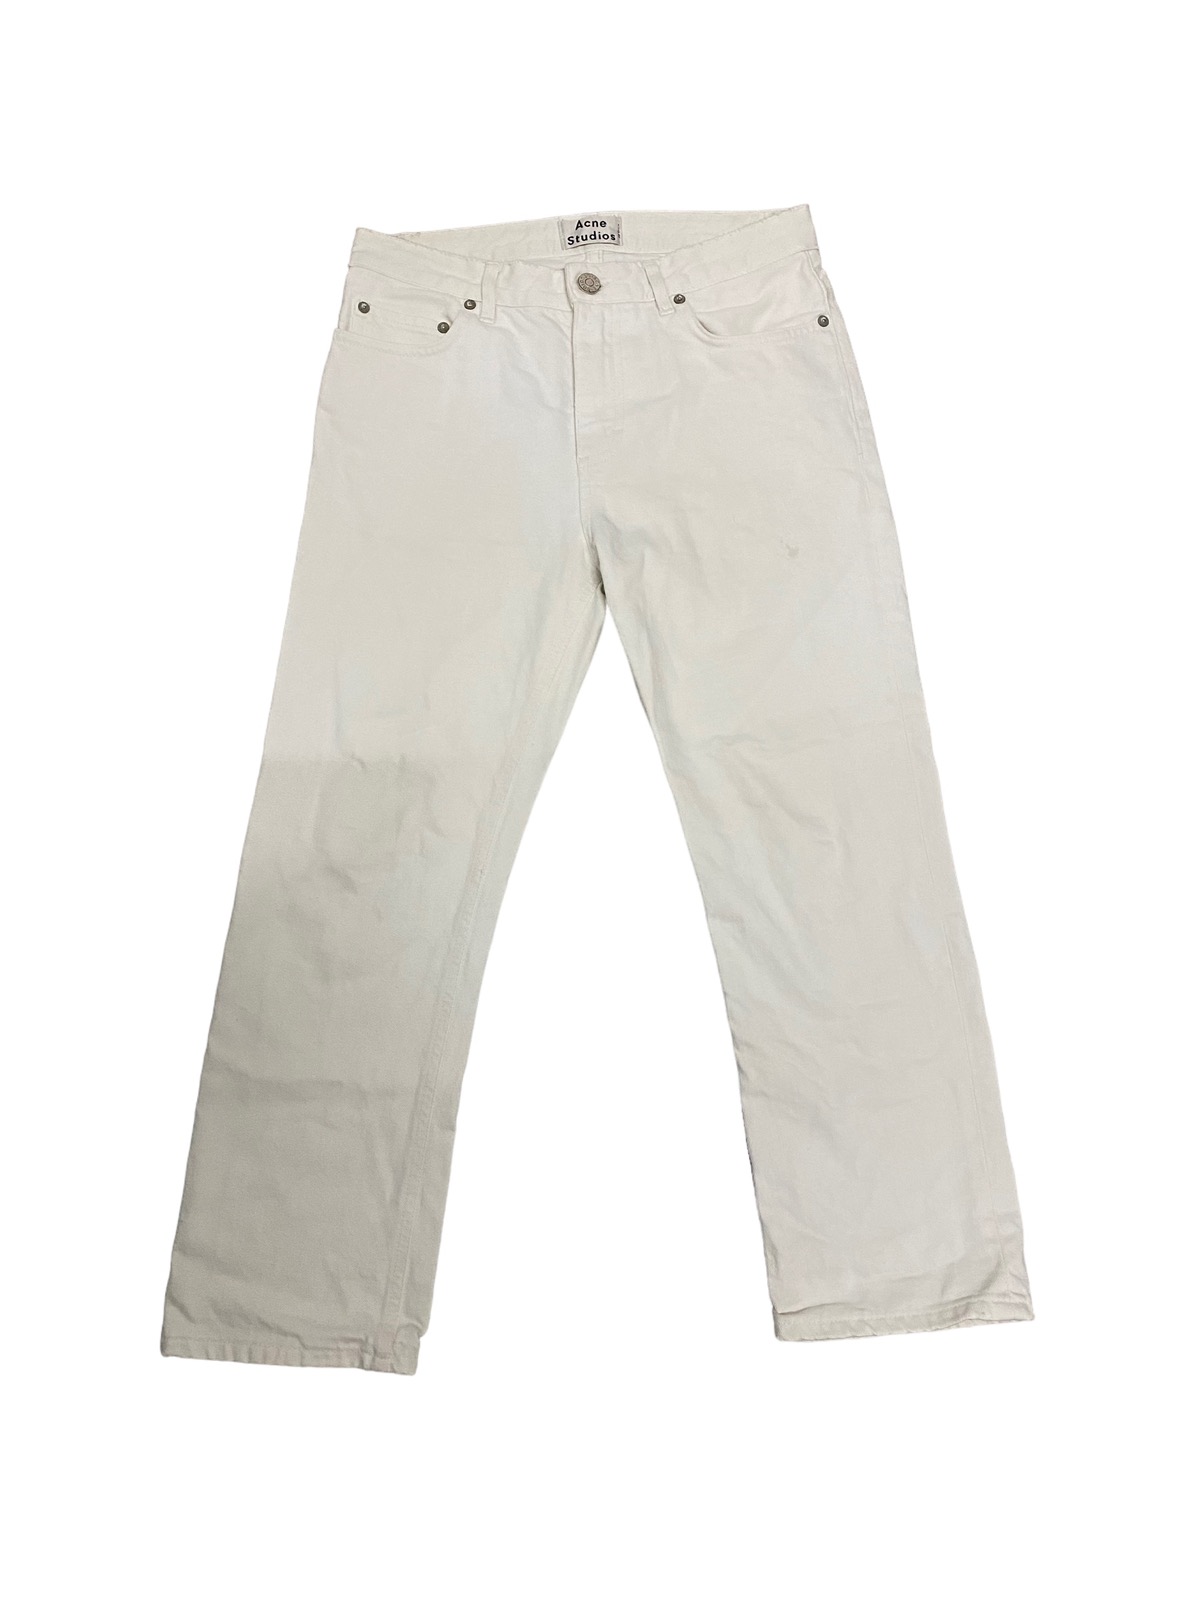 Vintage Acne Studios Pop White Denim Jeans - 1